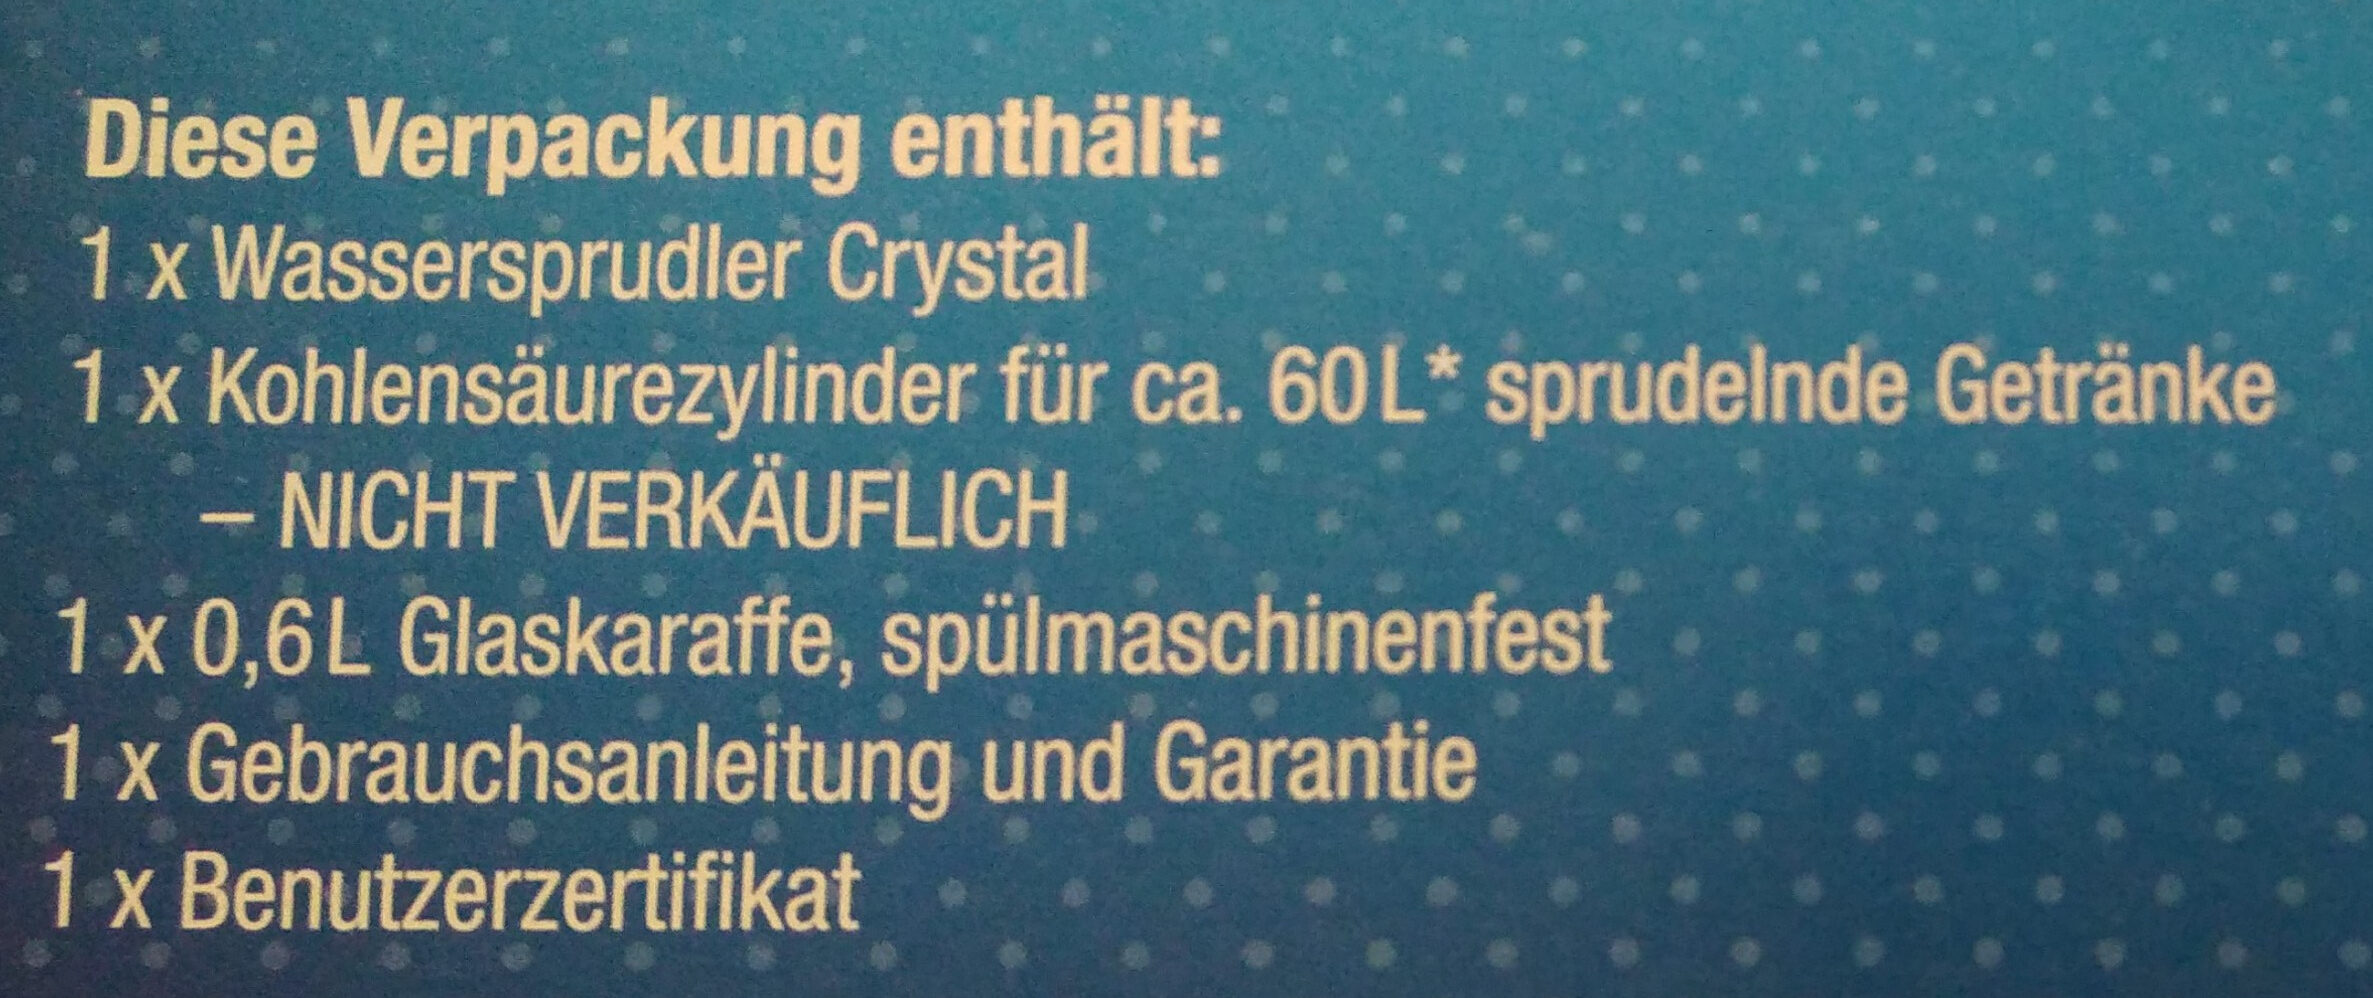 Crystal Titan - Ingredients - de